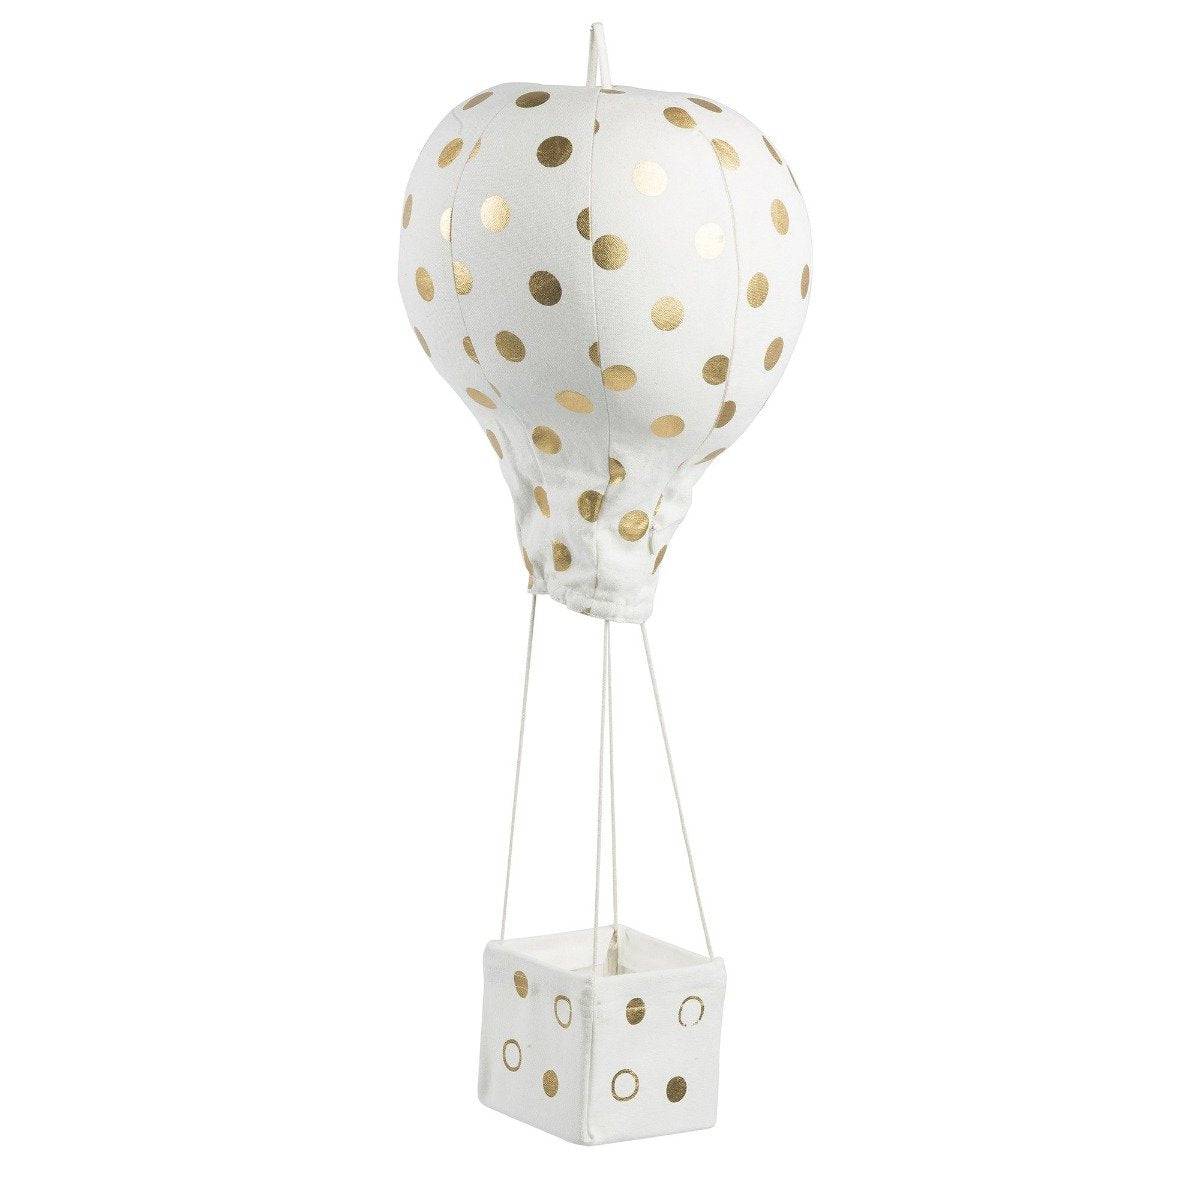 Lil' Polka Dot Hot Air Balloon in Gold - Twinkle Twinkle Little One